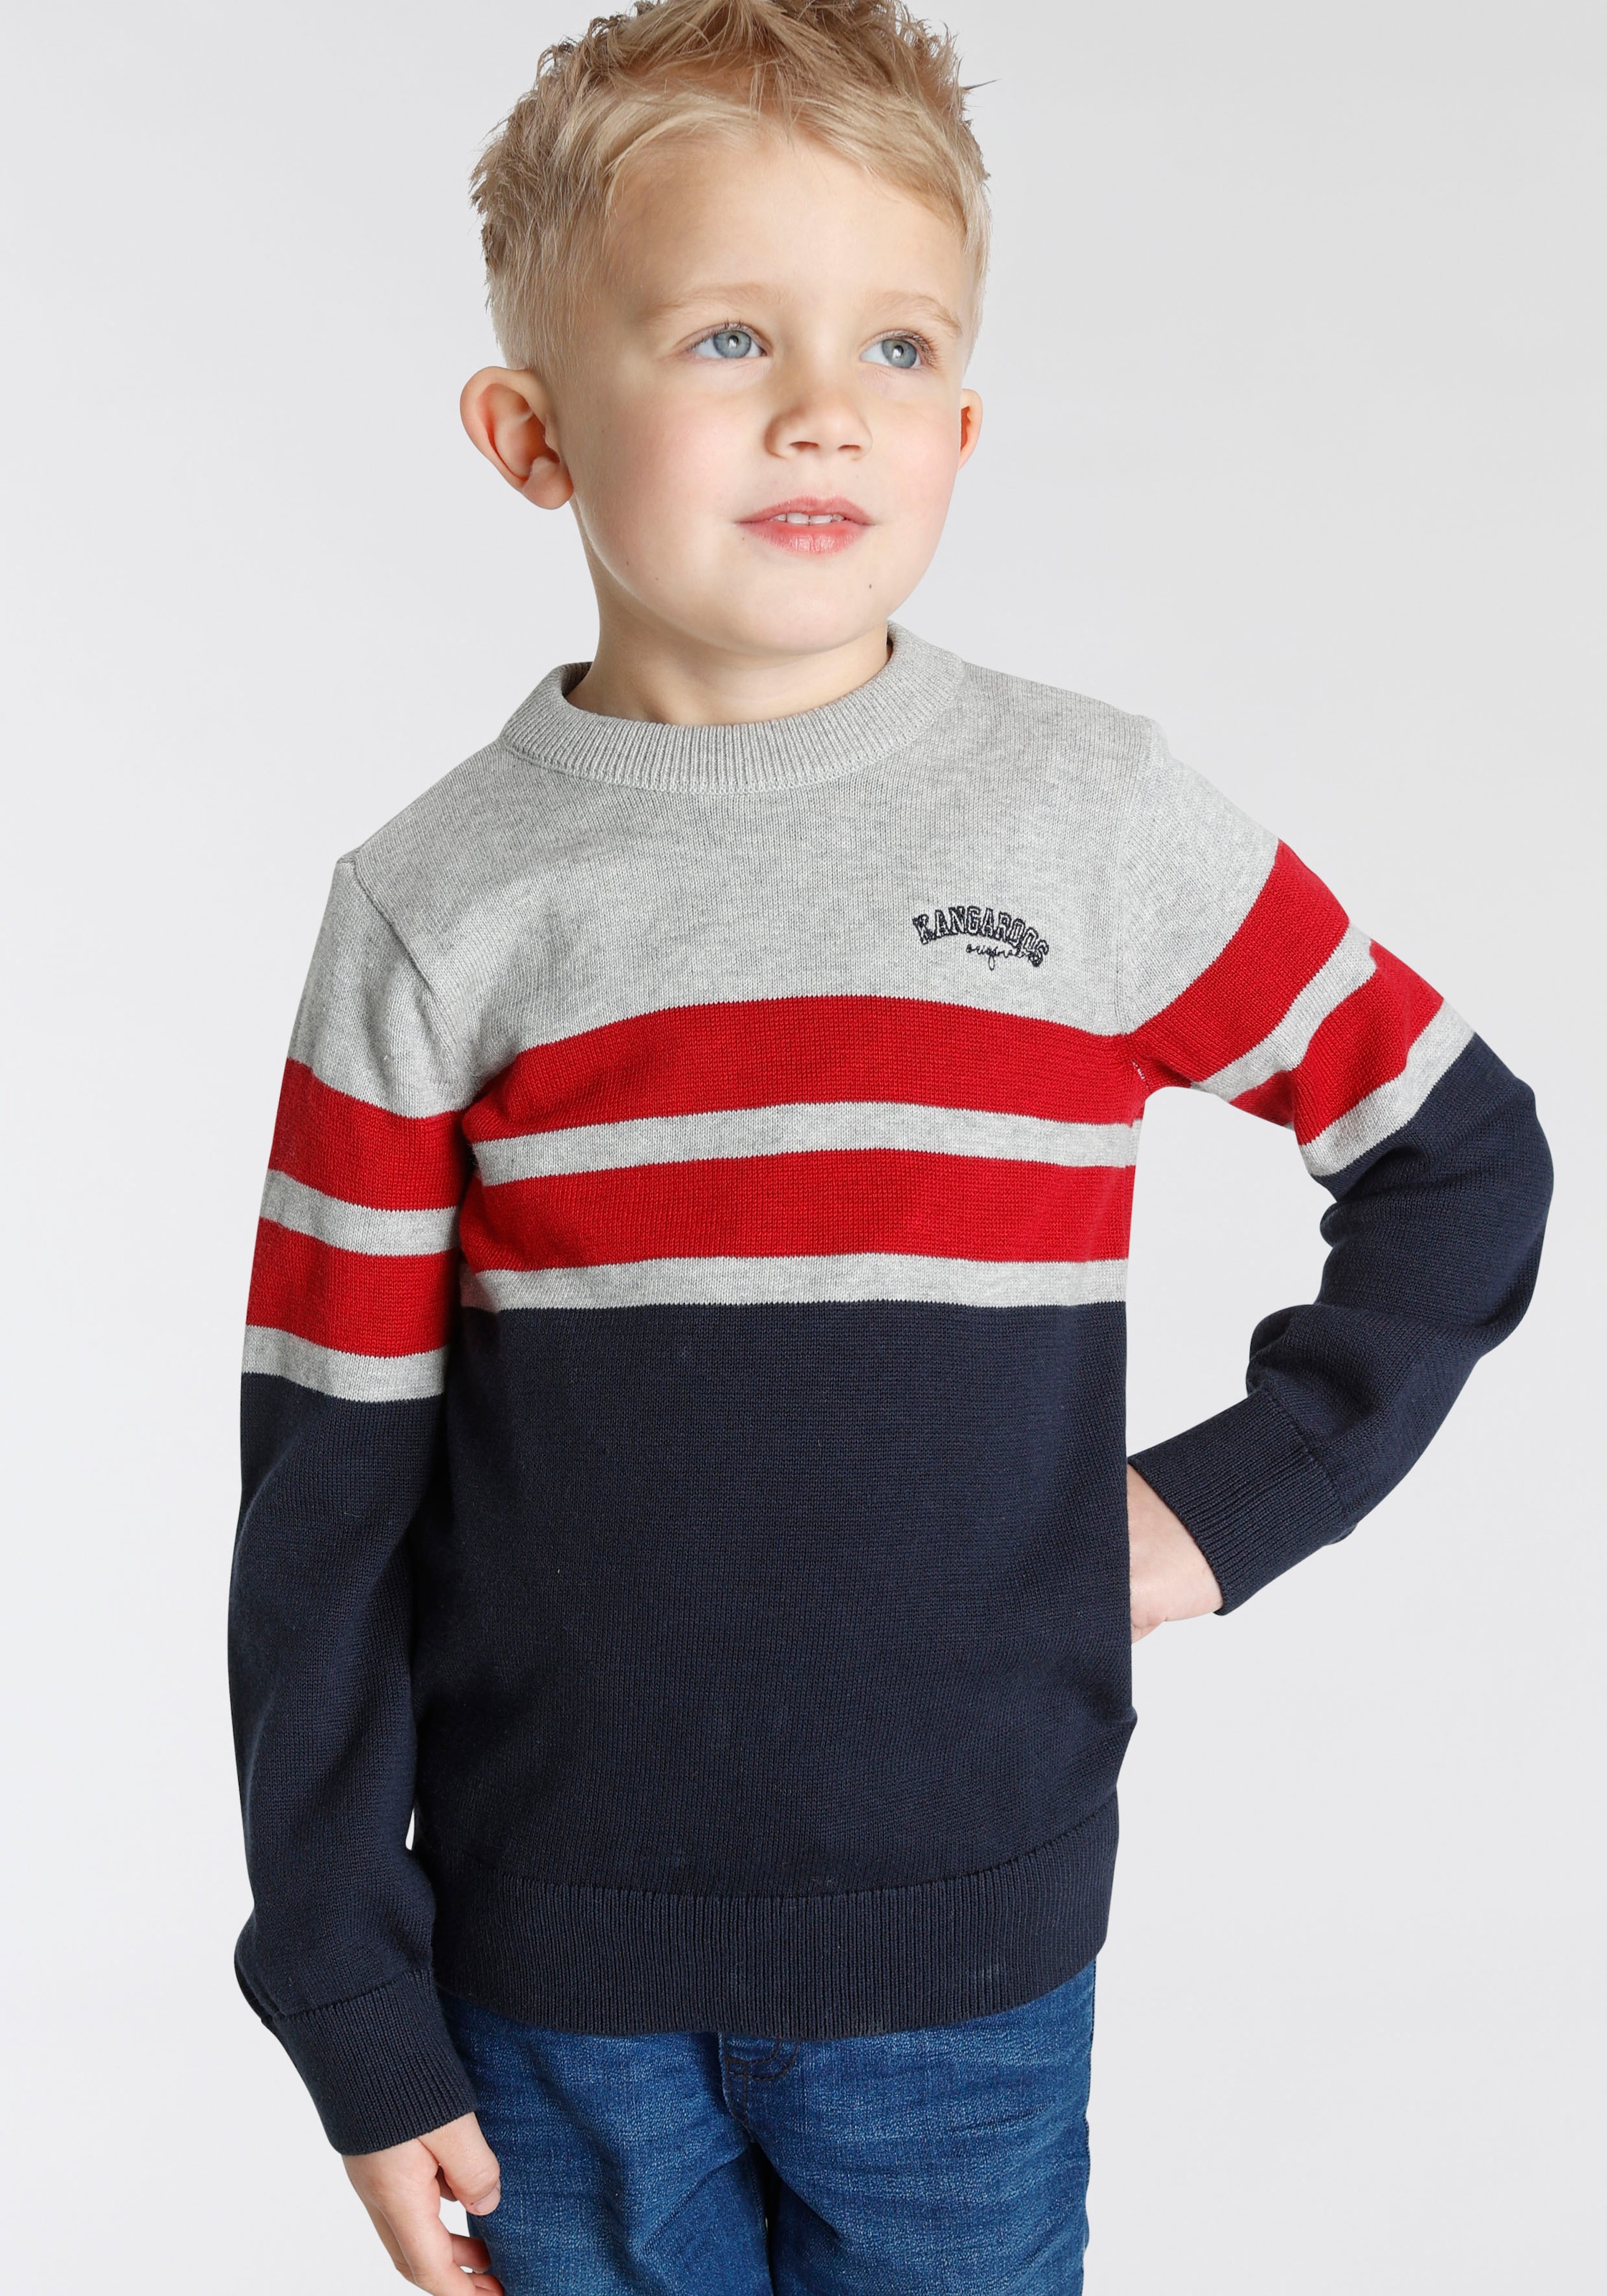 Ragwear Hoodie »Vendio«, Kinder Jungen Kapuzensweater mit großer Kapuze  kaufen | BAUR | Hoodies